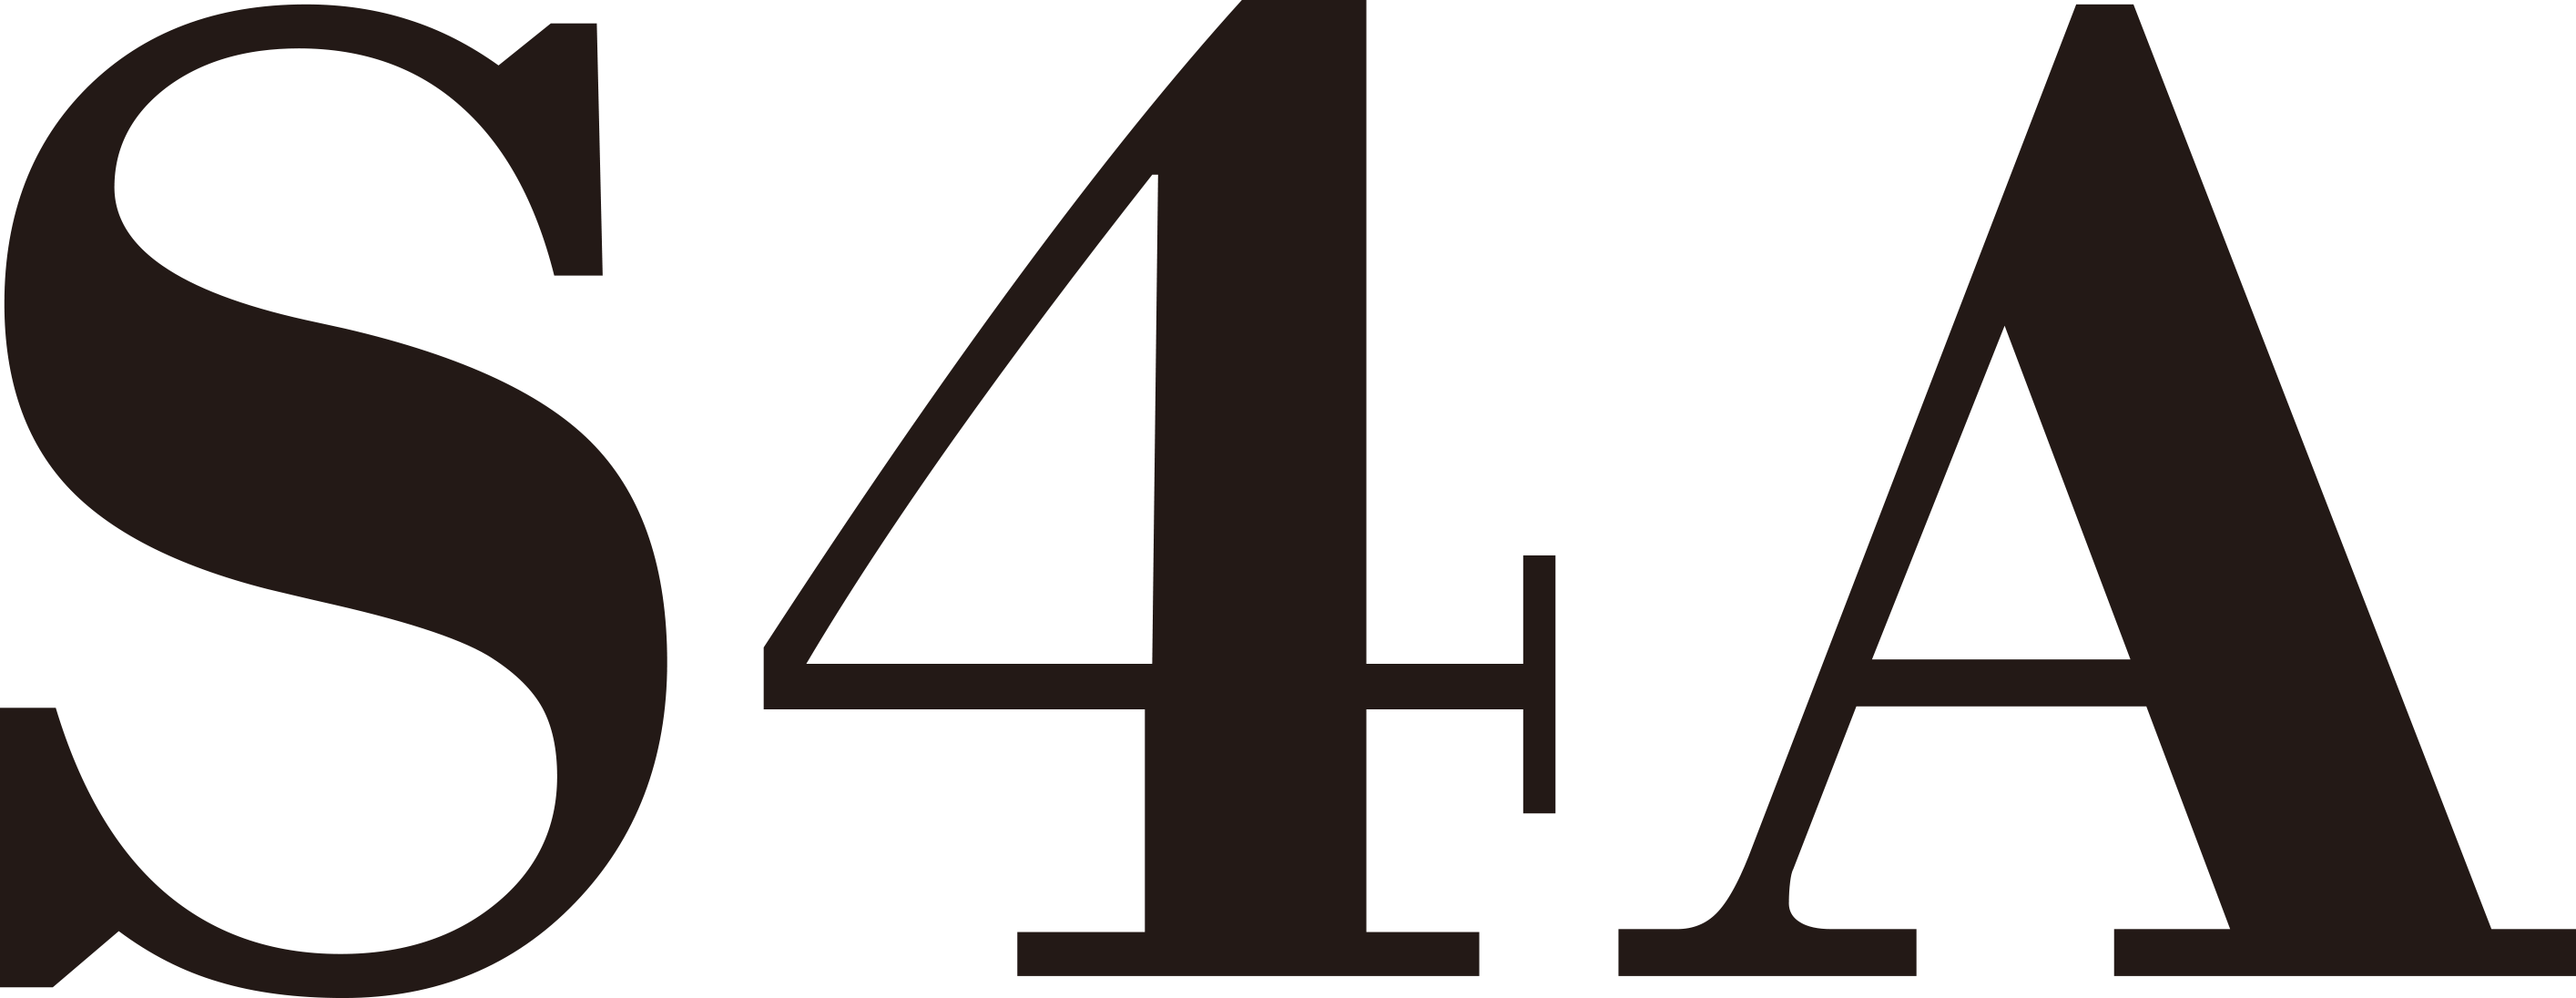 Logotipo S4A.png